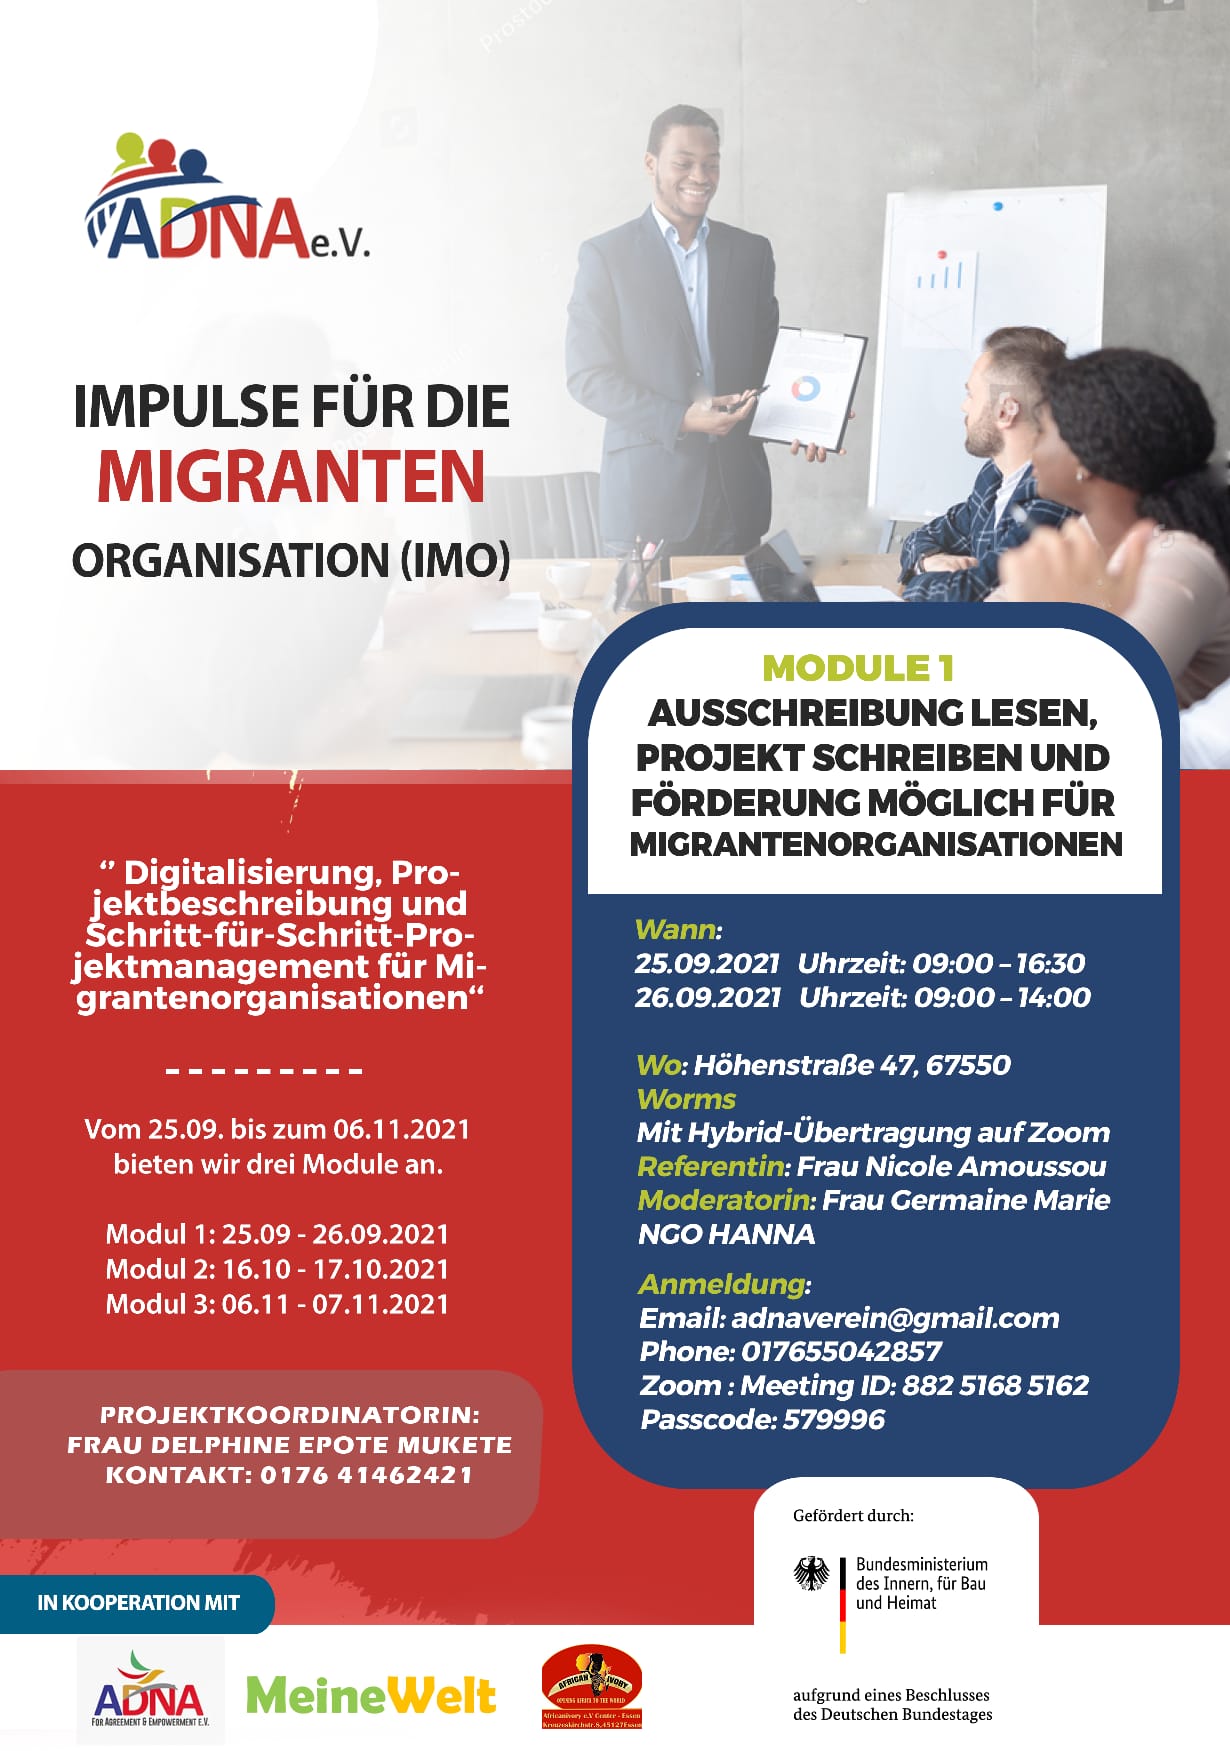   Impulse für die Migrantenorganisation (IMO)